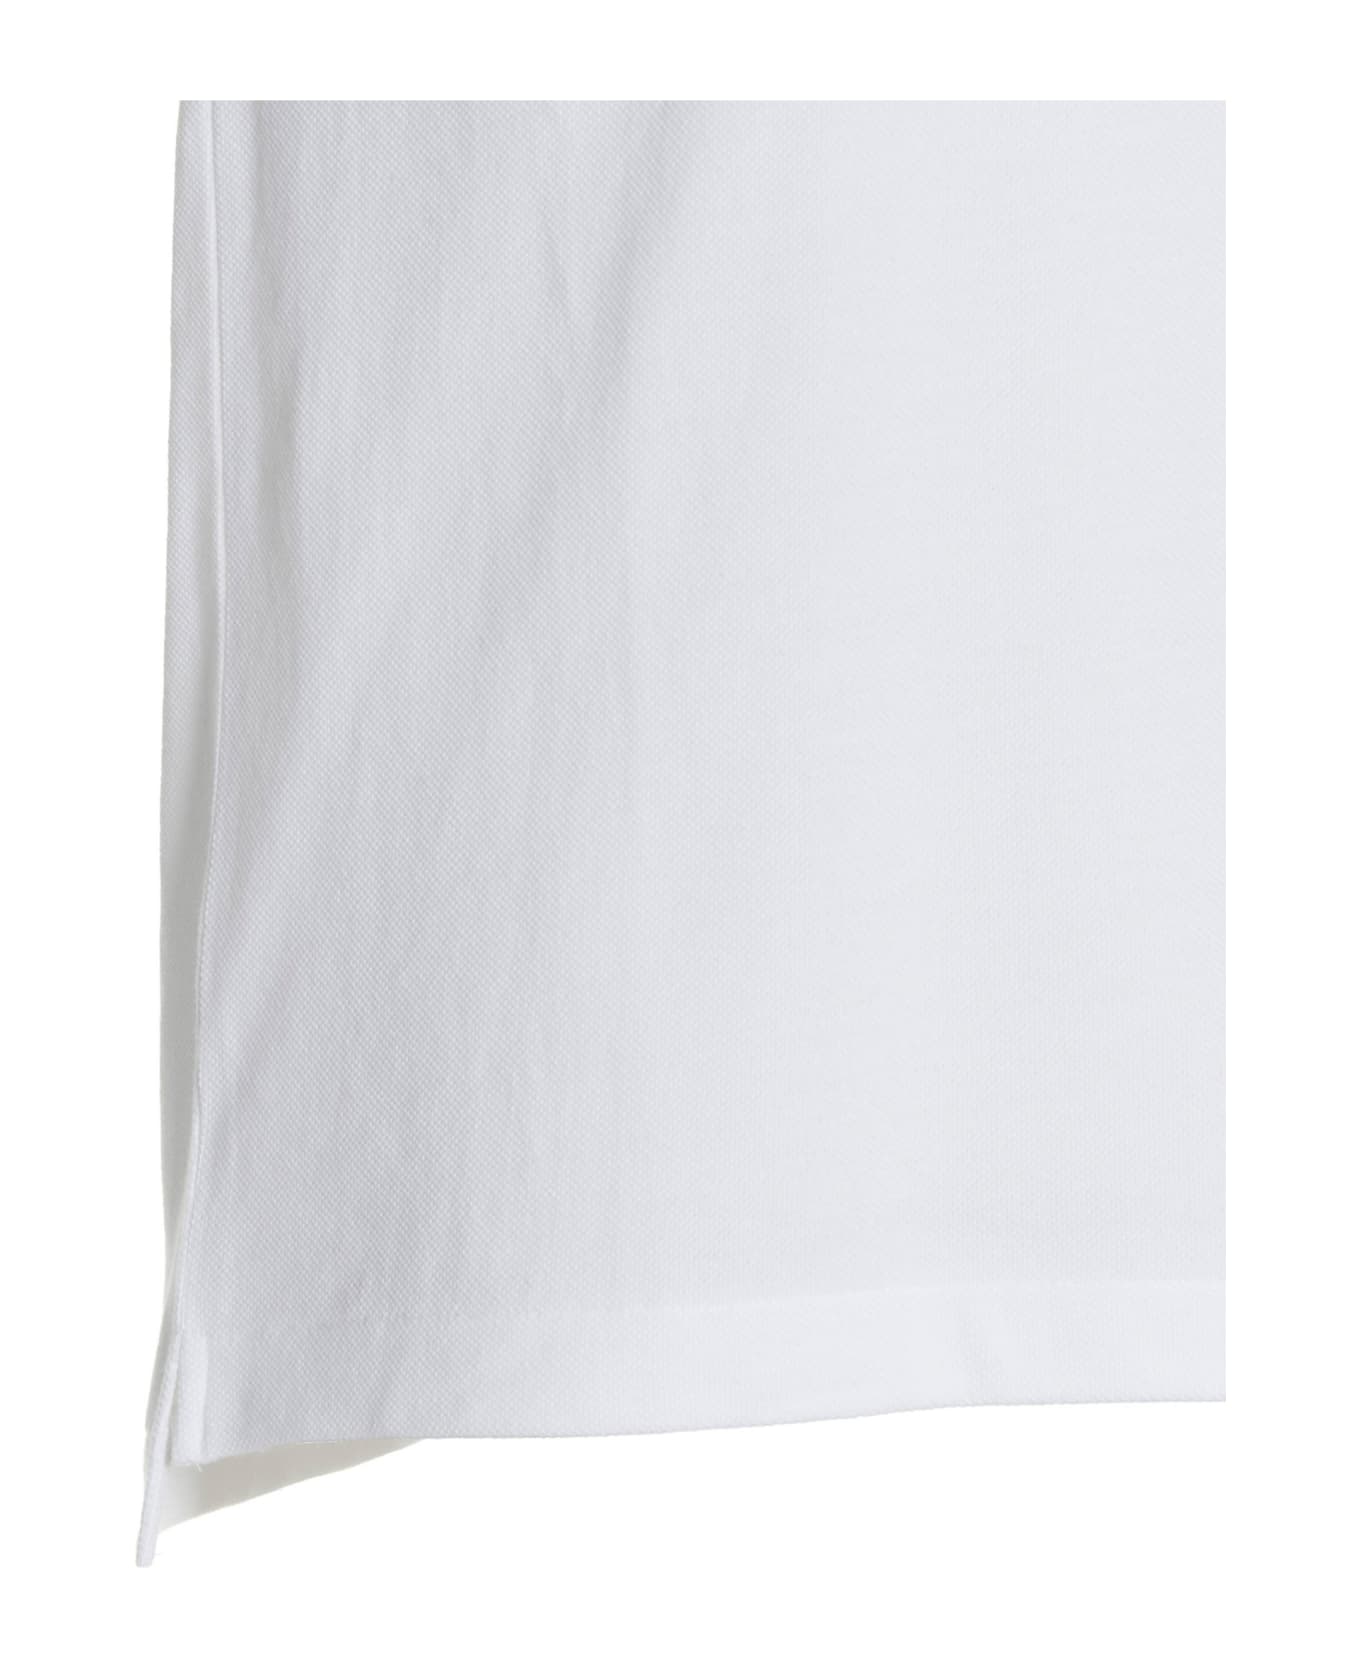 Comme des Garçons Play Logo Patch Polo Shirt - White ポロシャツ